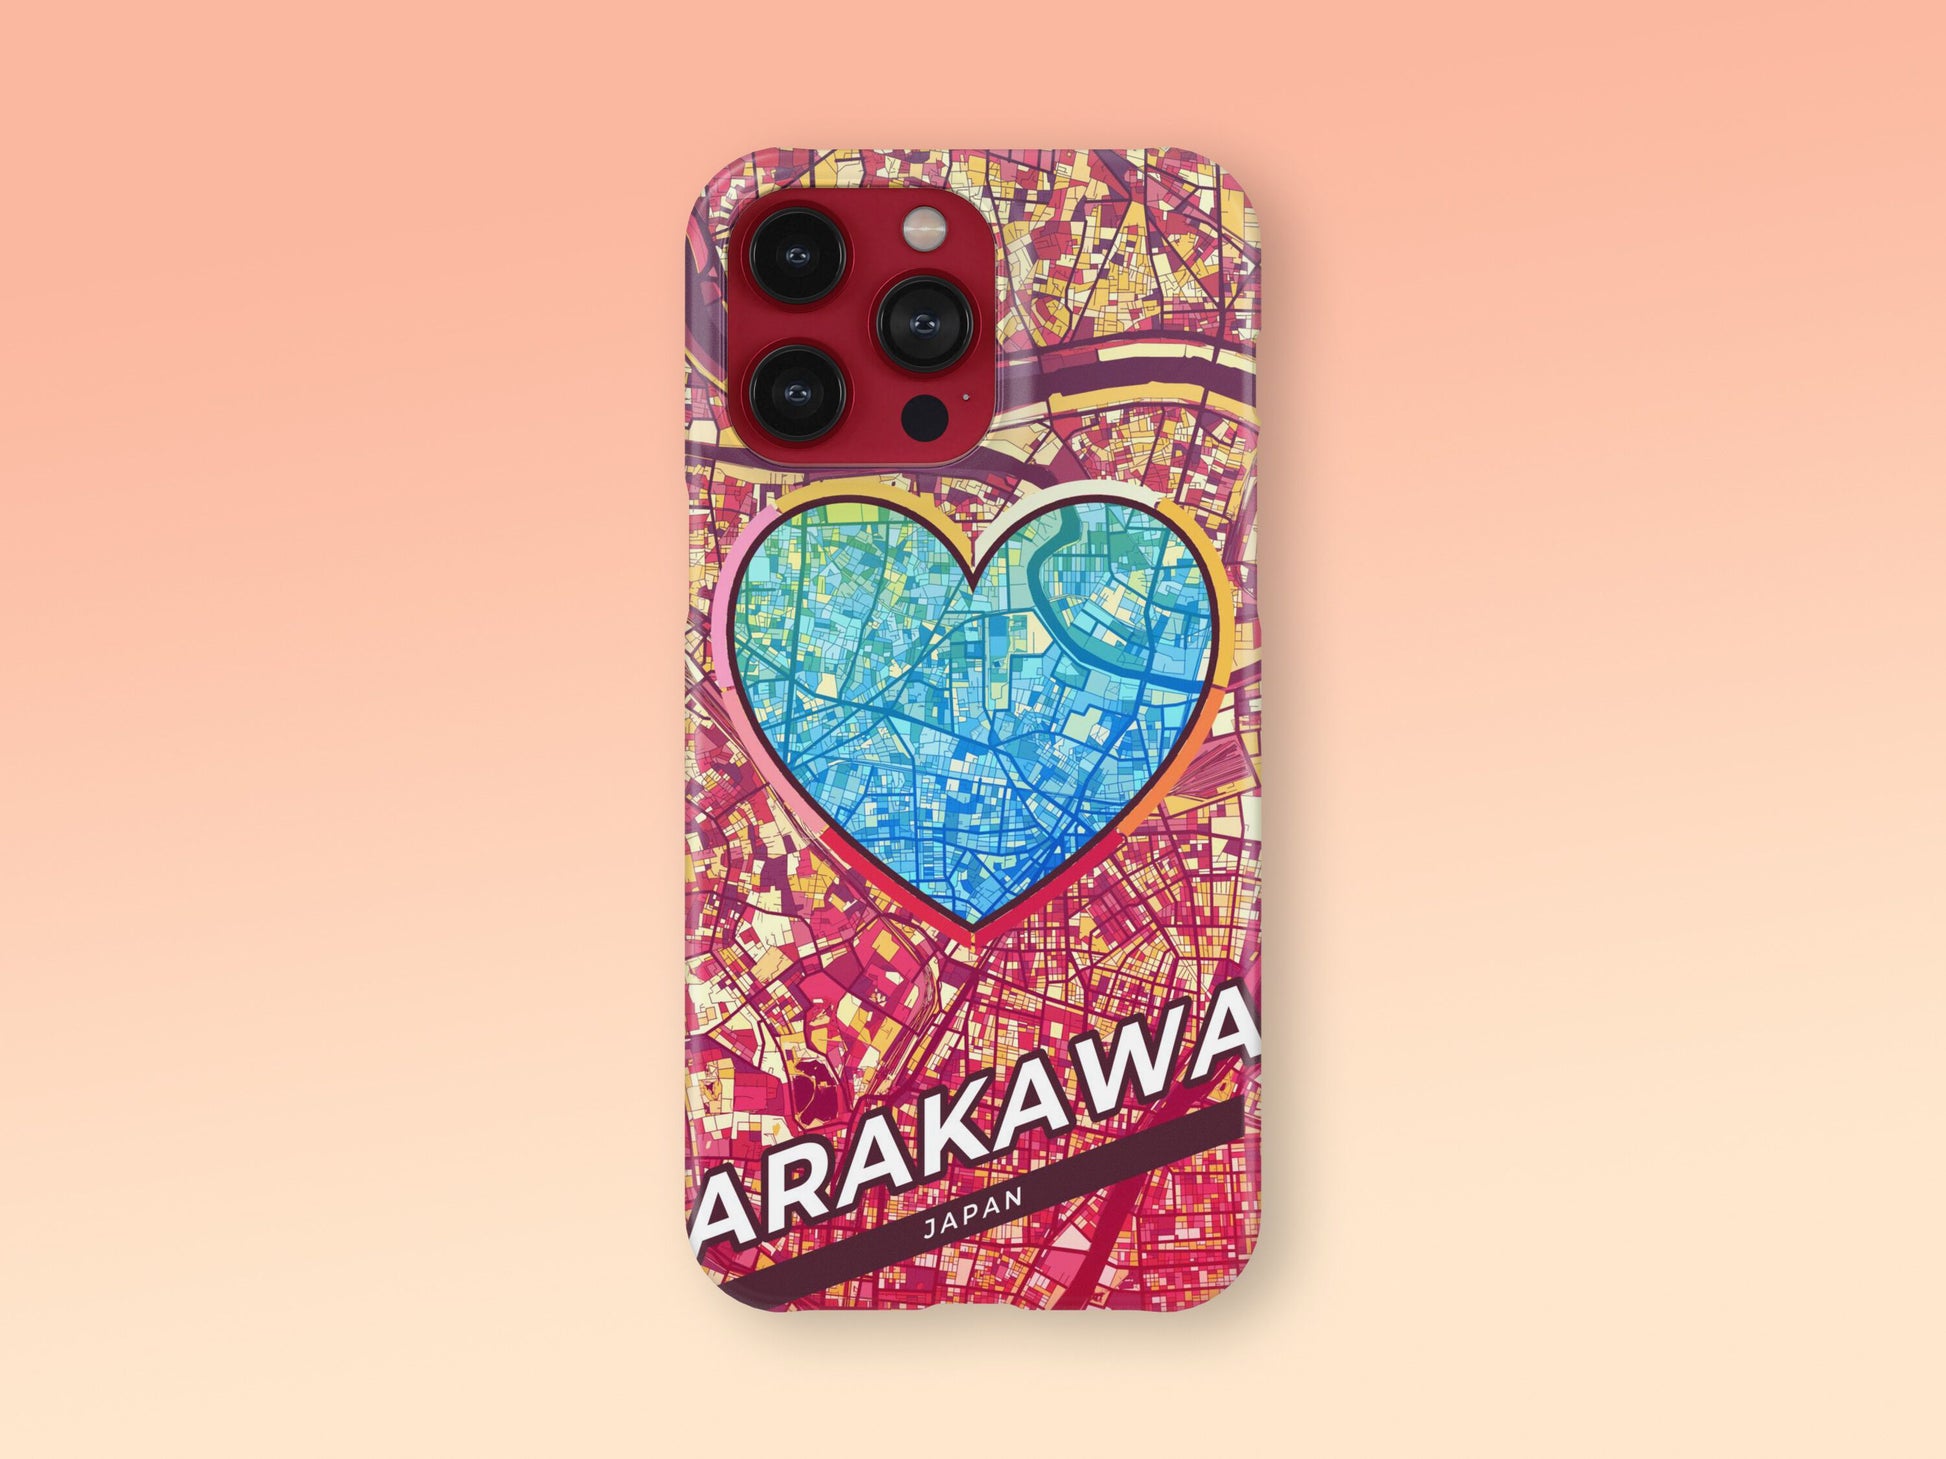 Arakawa Japan slim phone case with colorful icon. Birthday, wedding or housewarming gift. Couple match cases. 2